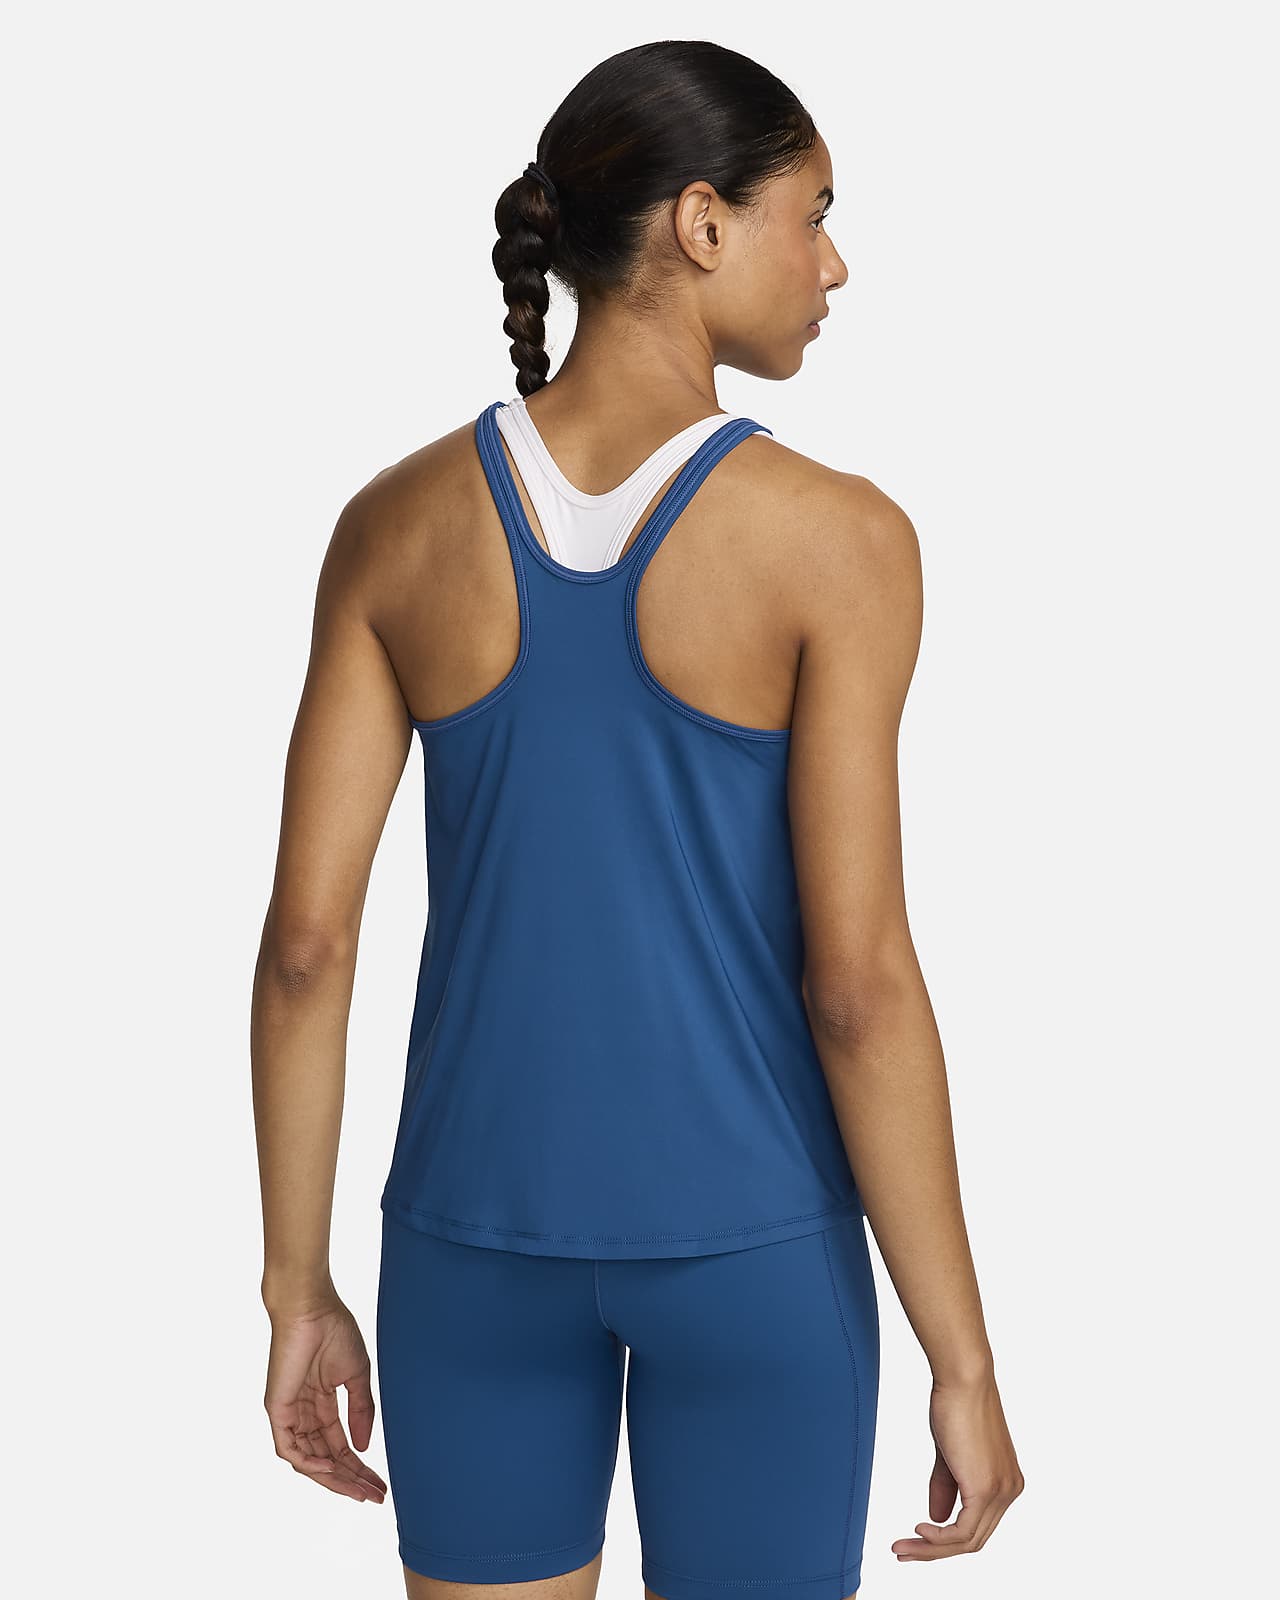 Women's Tank Tops & Sleeveless Tops. Nike CH